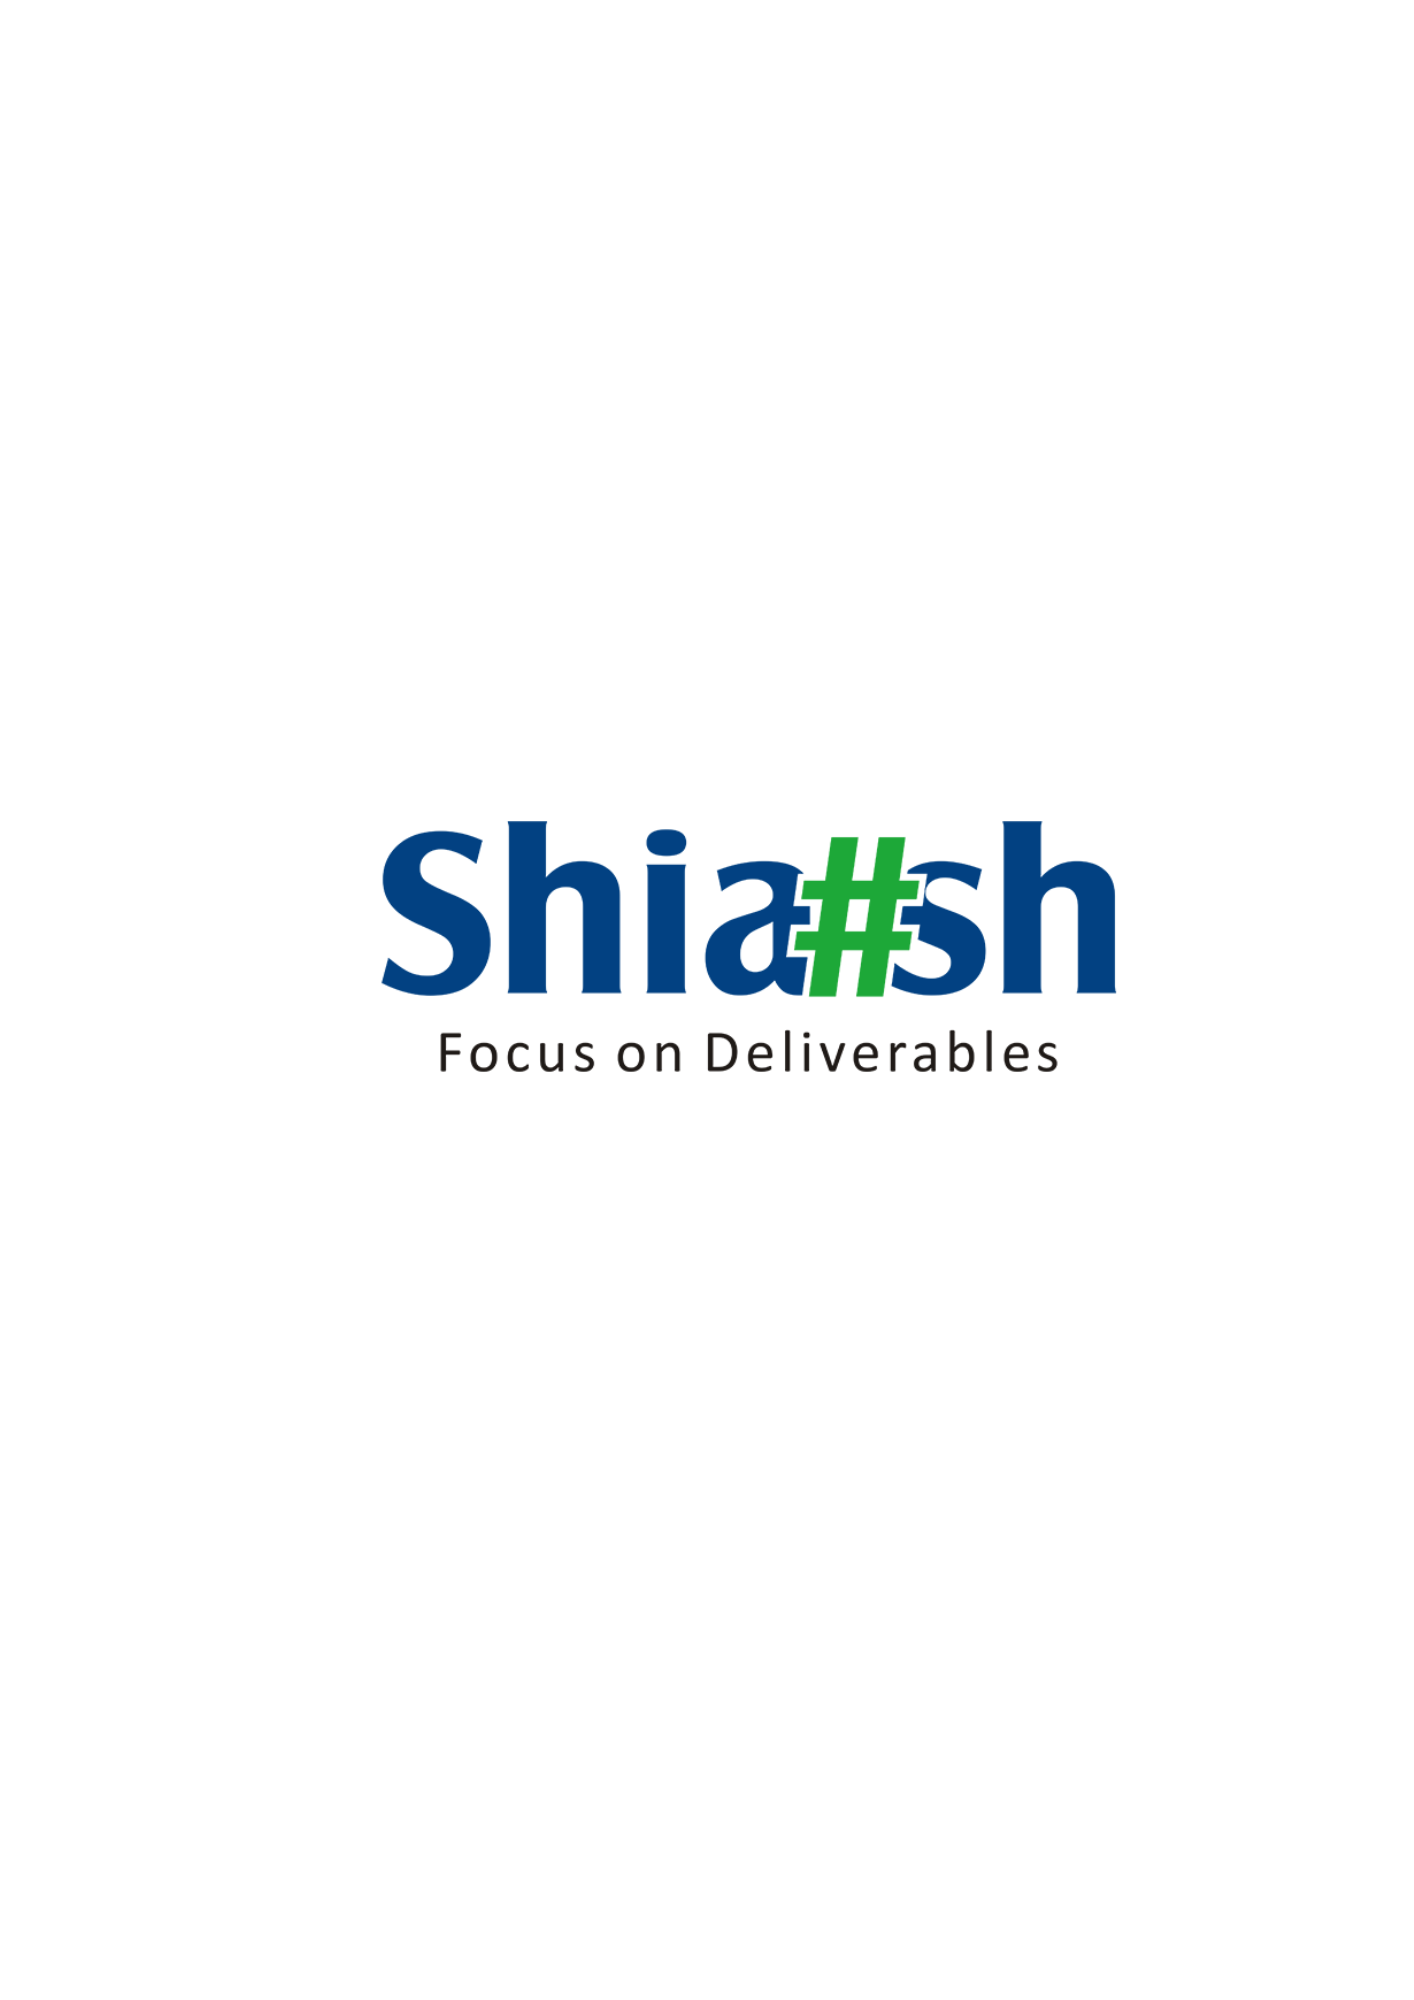 Shiash Info Solutions in Elioplus